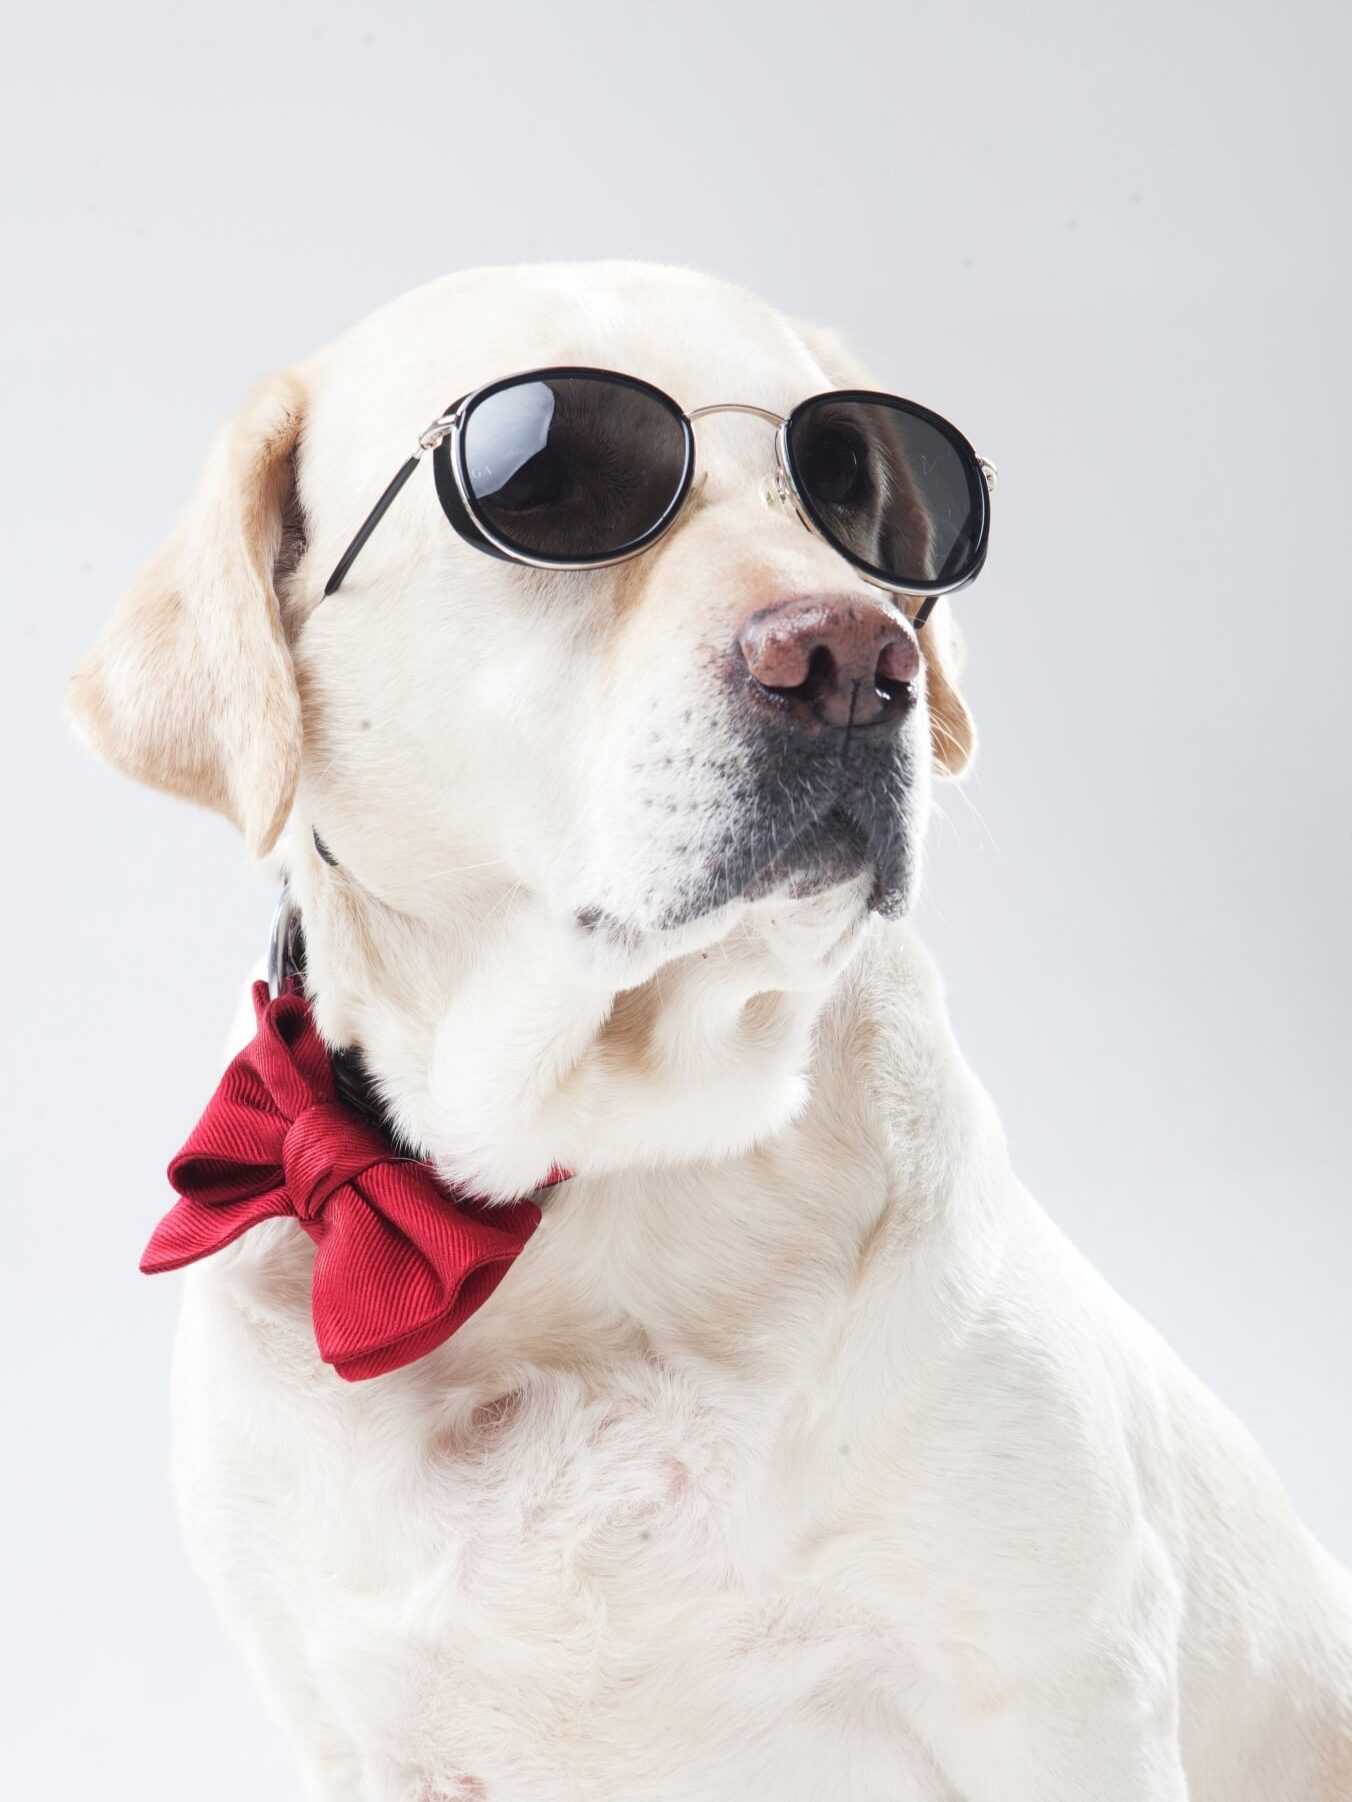 cool cute dog wearing sunglasses photoAC edited